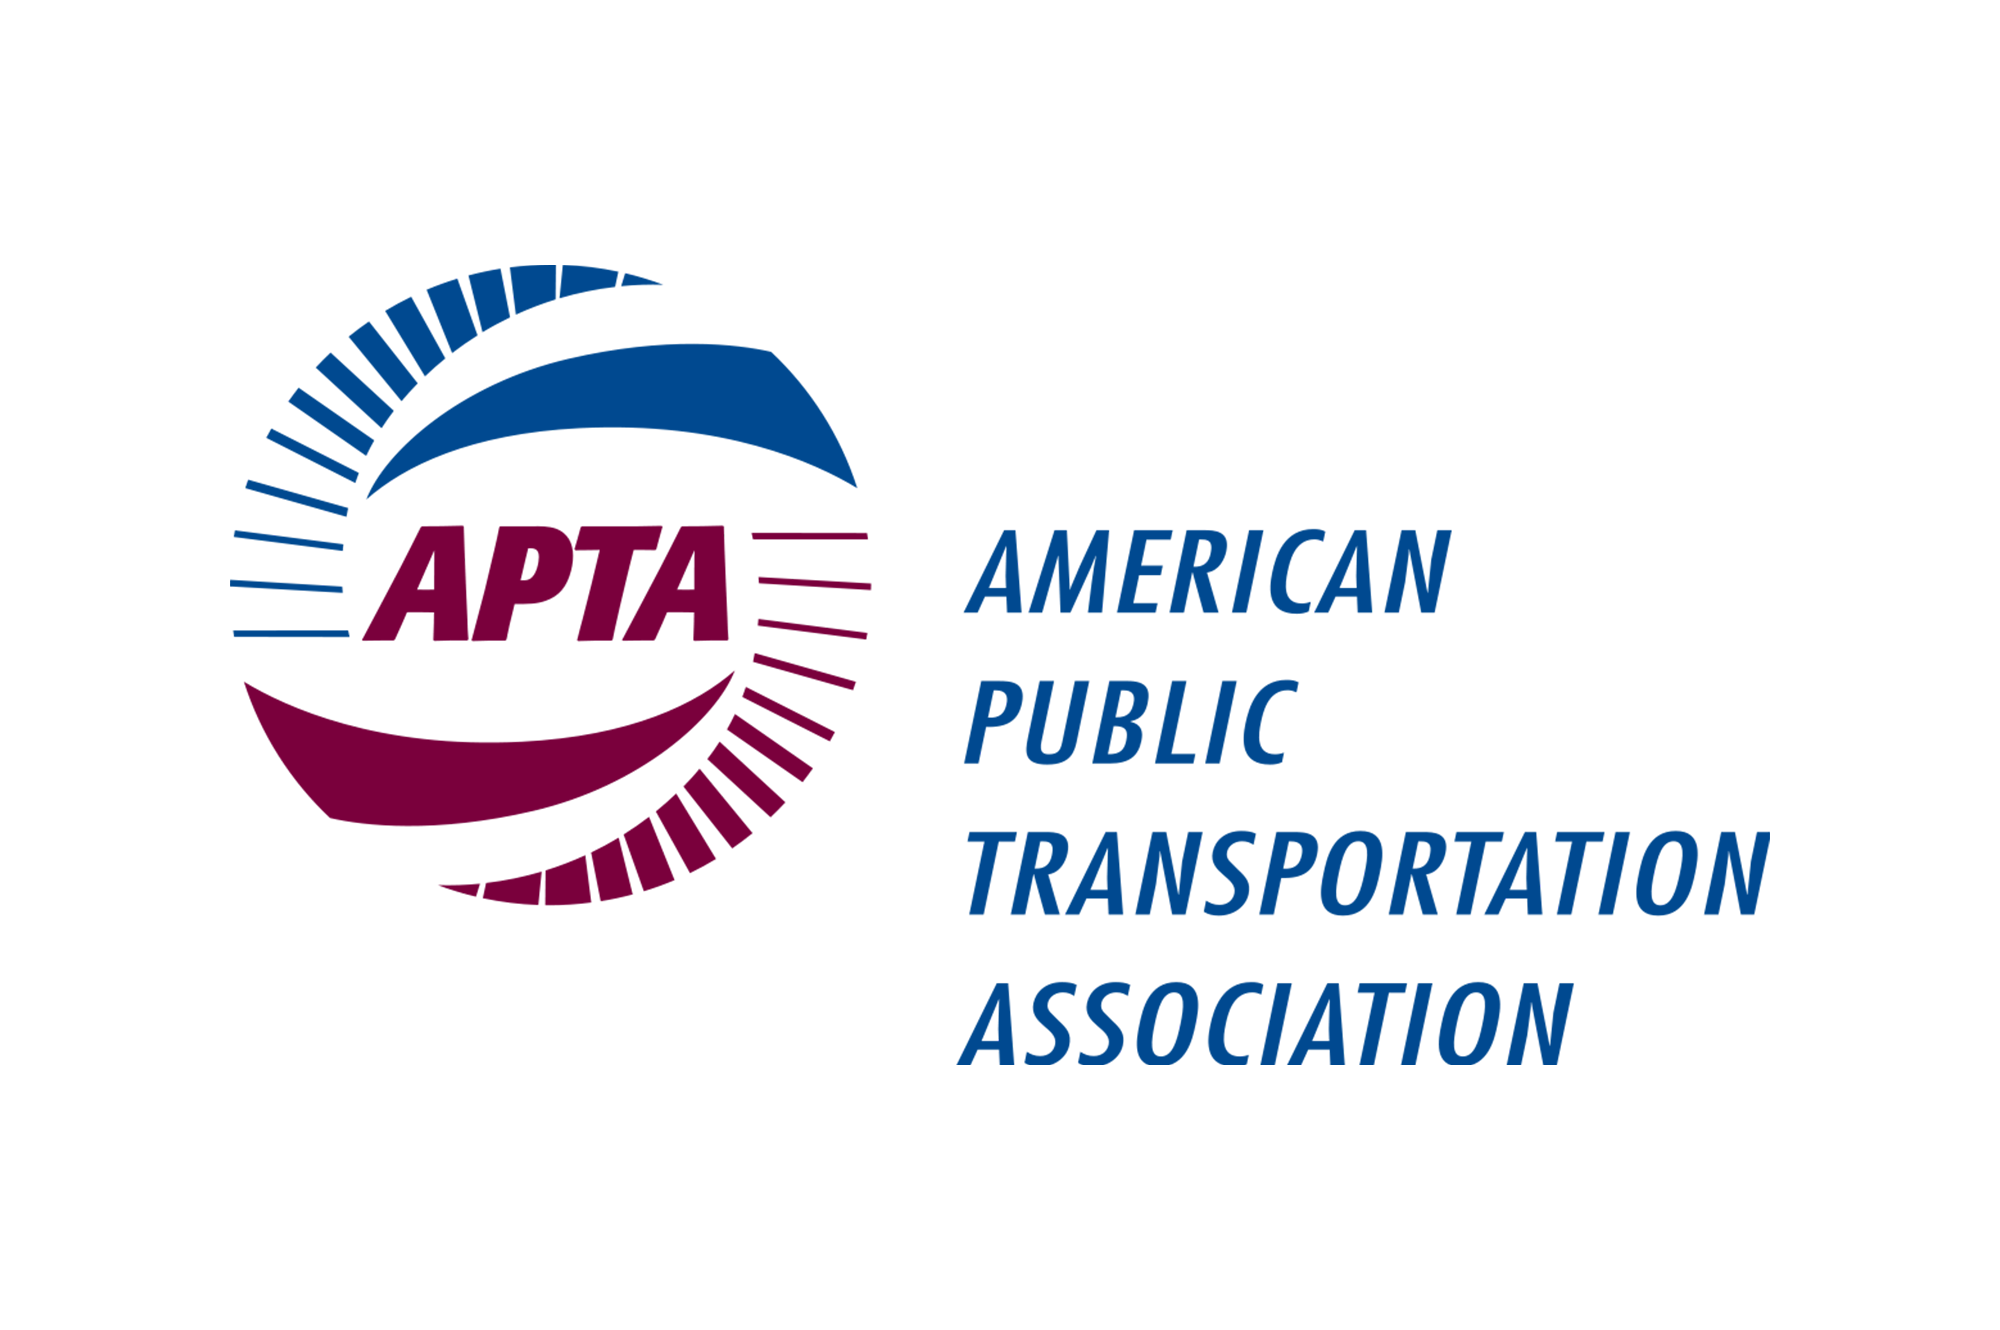 American Public Transportation Association logo